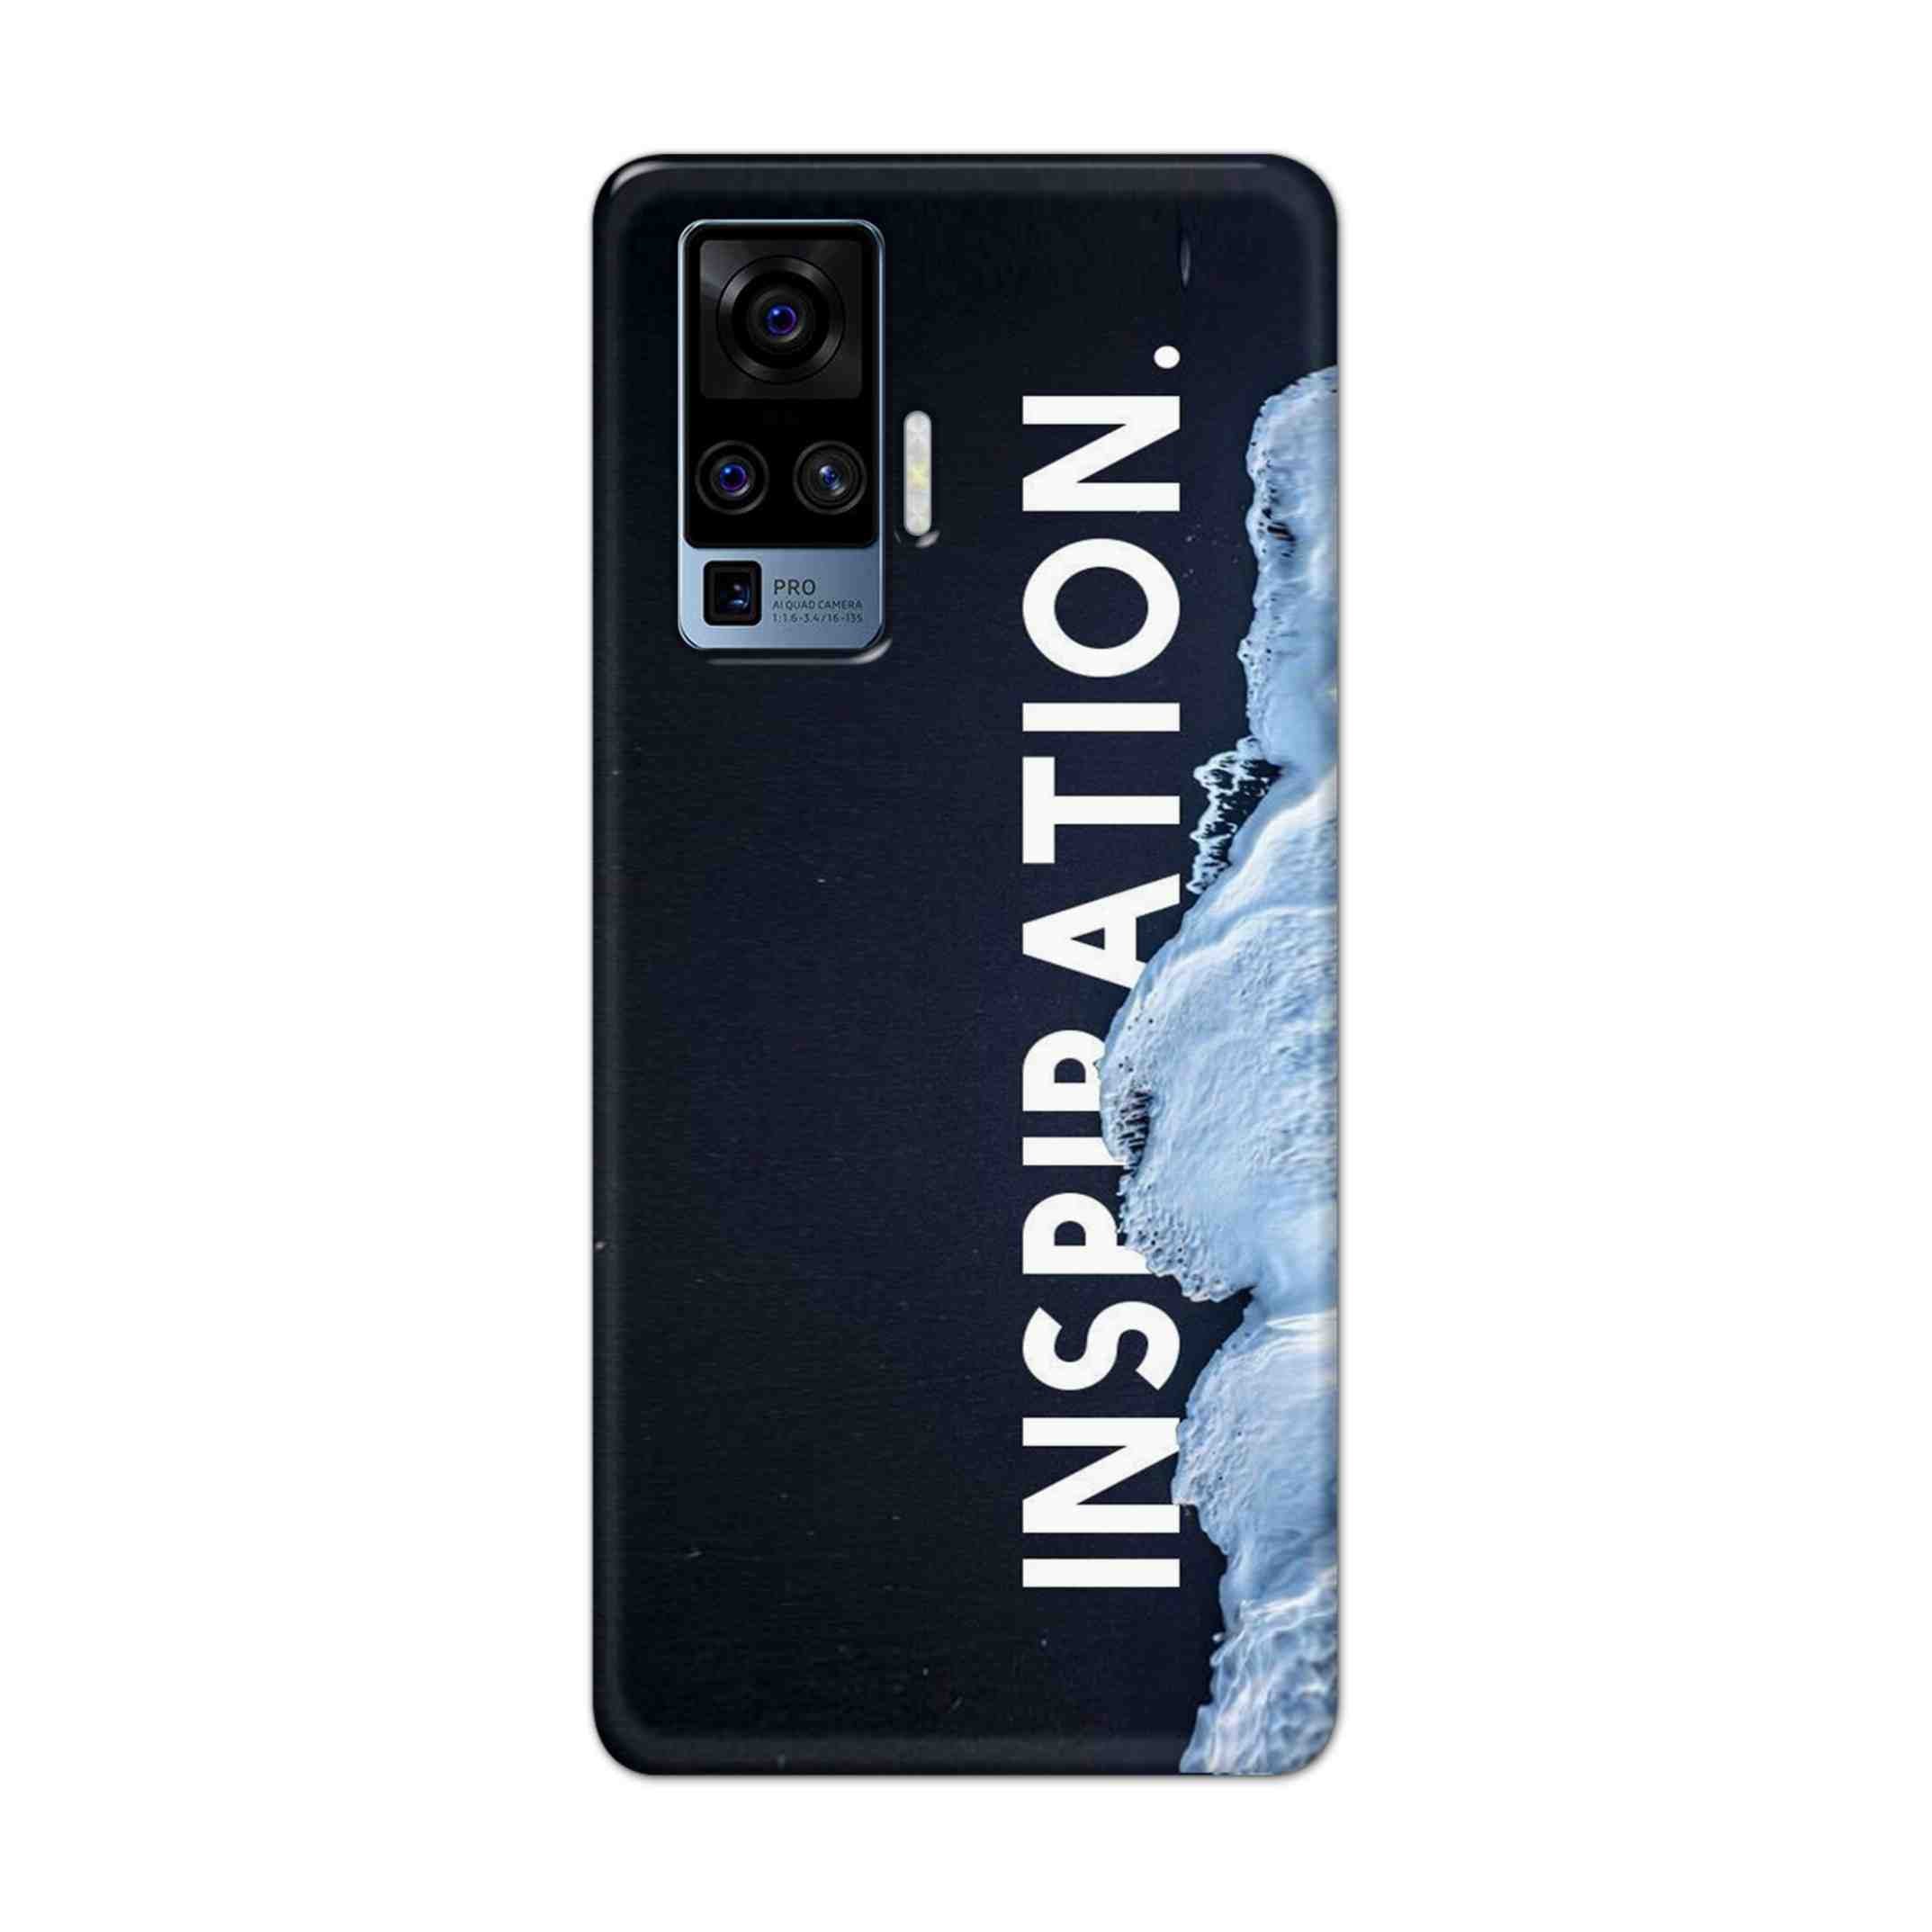 Buy Inspiration Hard Back Mobile Phone Case/Cover For Vivo X50 Pro Online